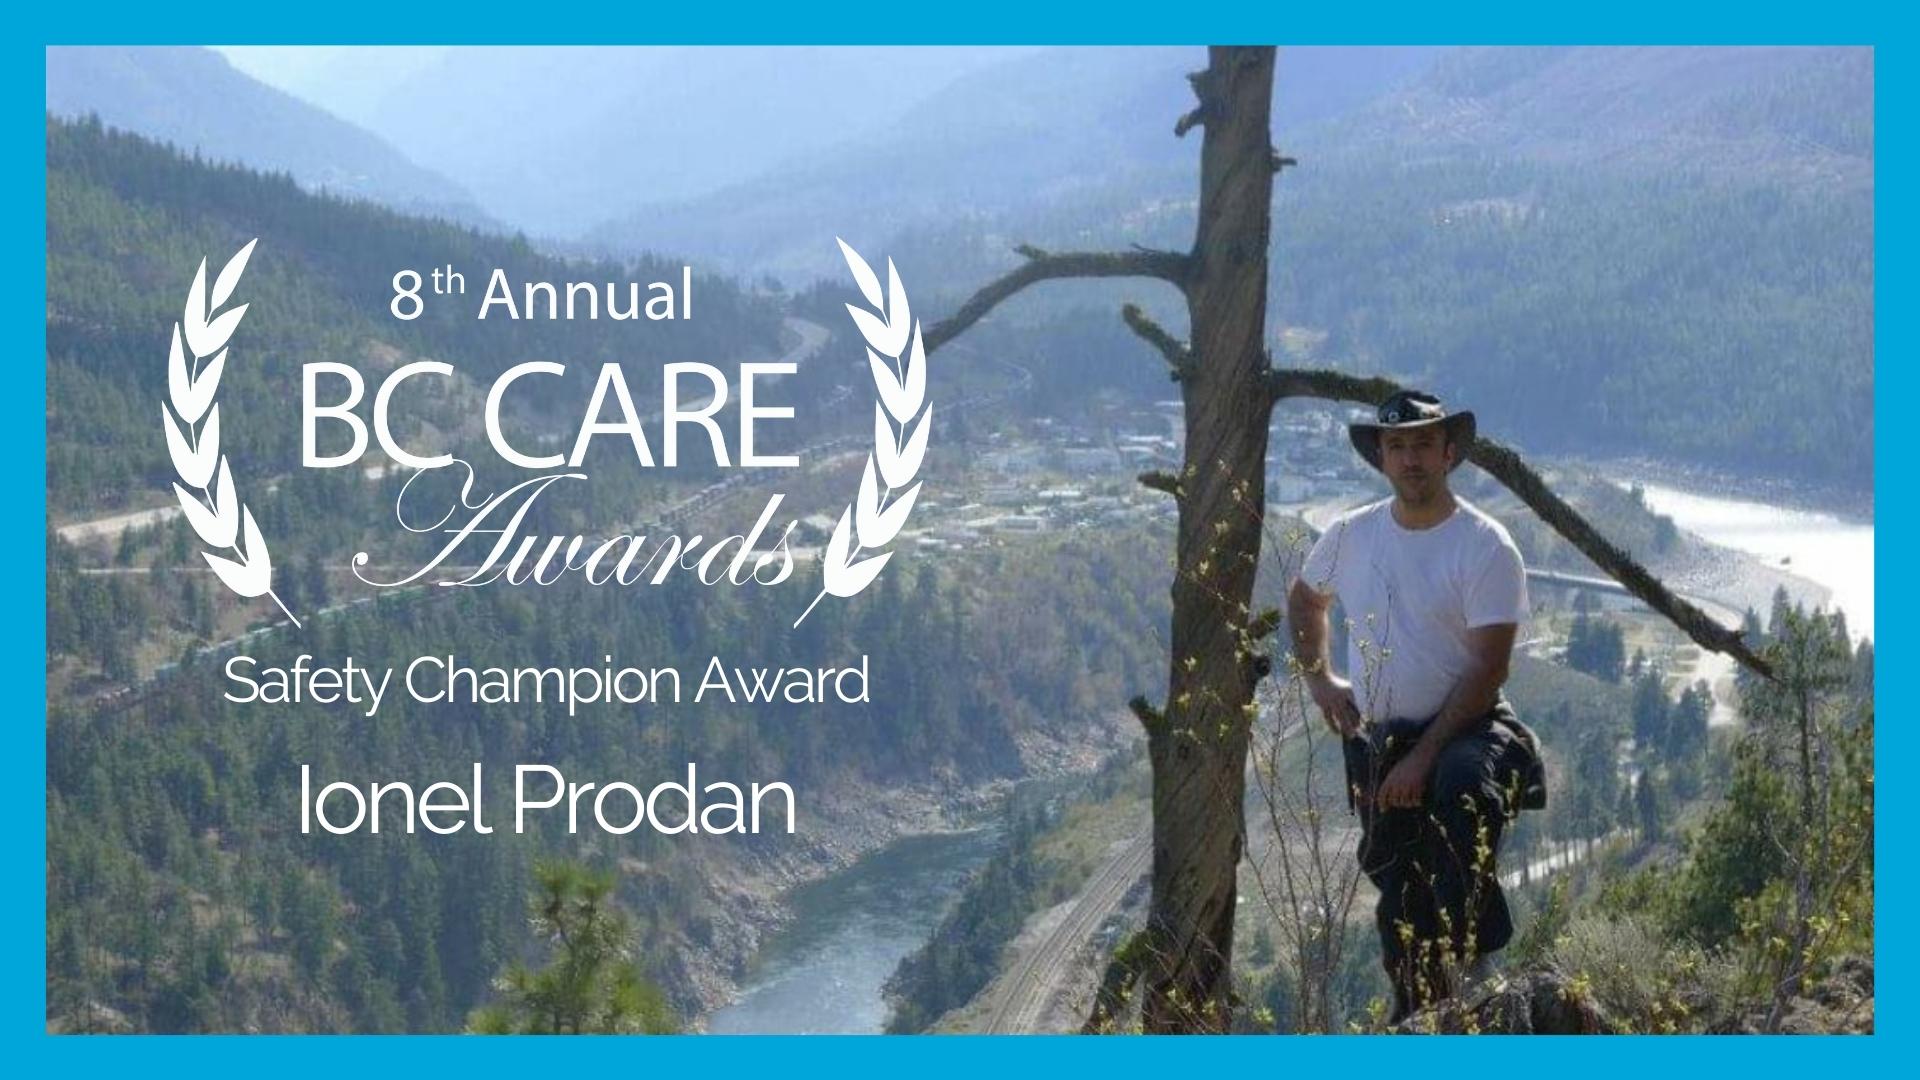 Congratulations, Ionel Prodan! Winner of the Safety Champion Award